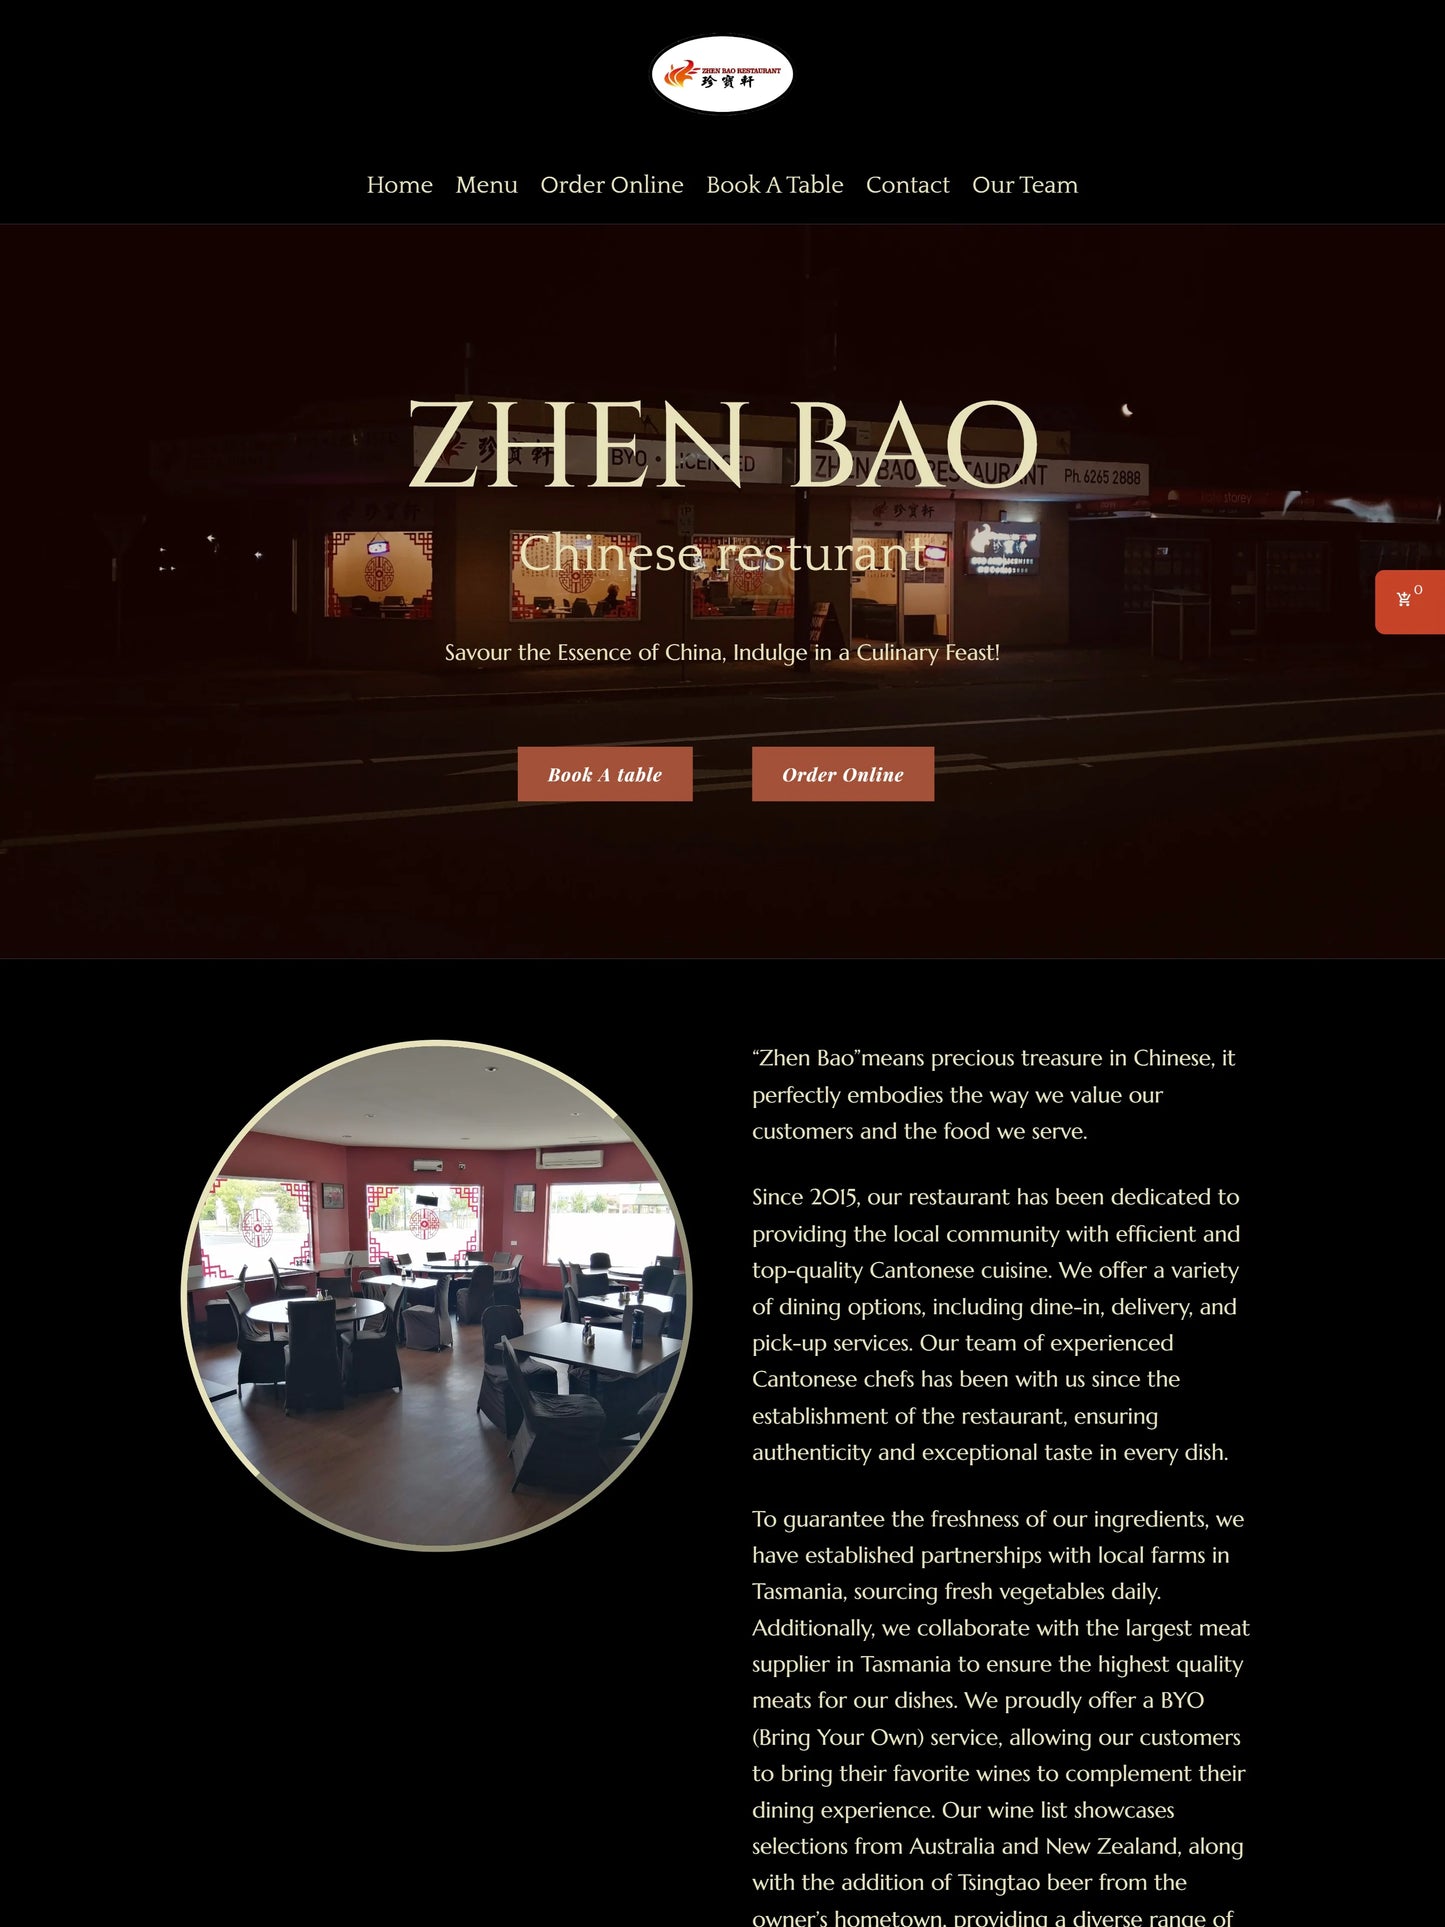 Zhen Bao restaurant